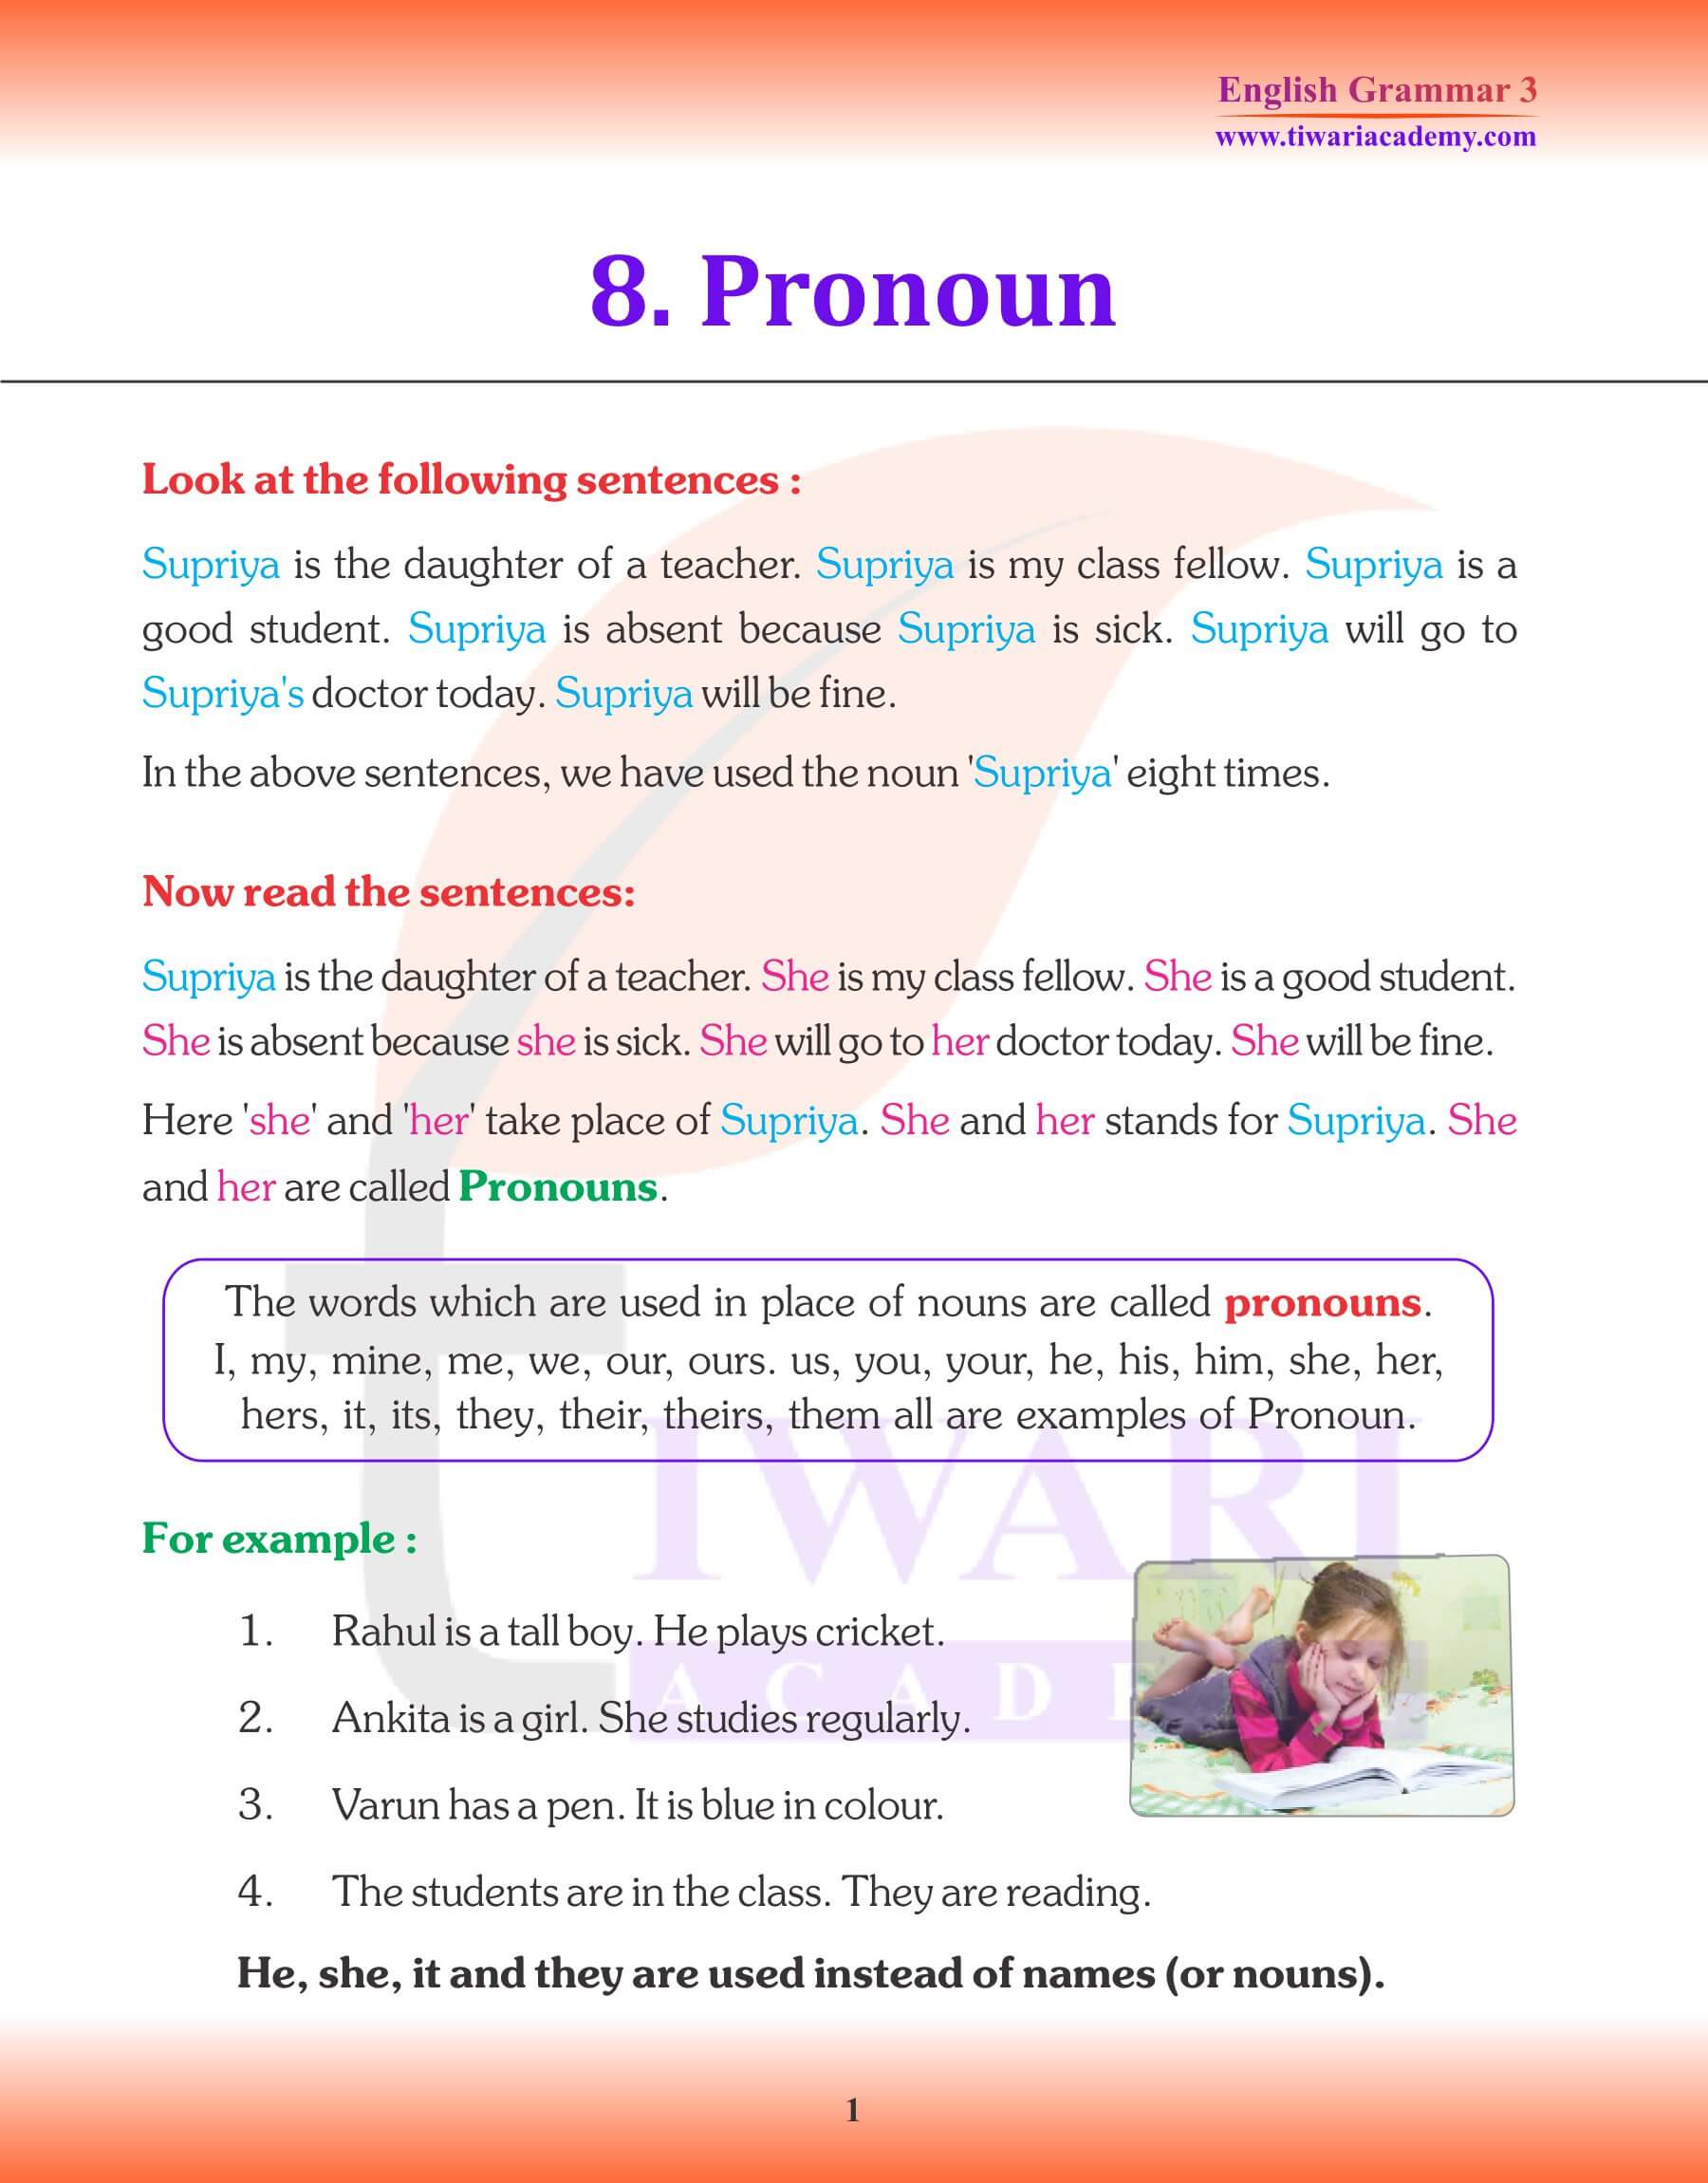 English Grammar for Grade 3 Chapter 8 Pronoun